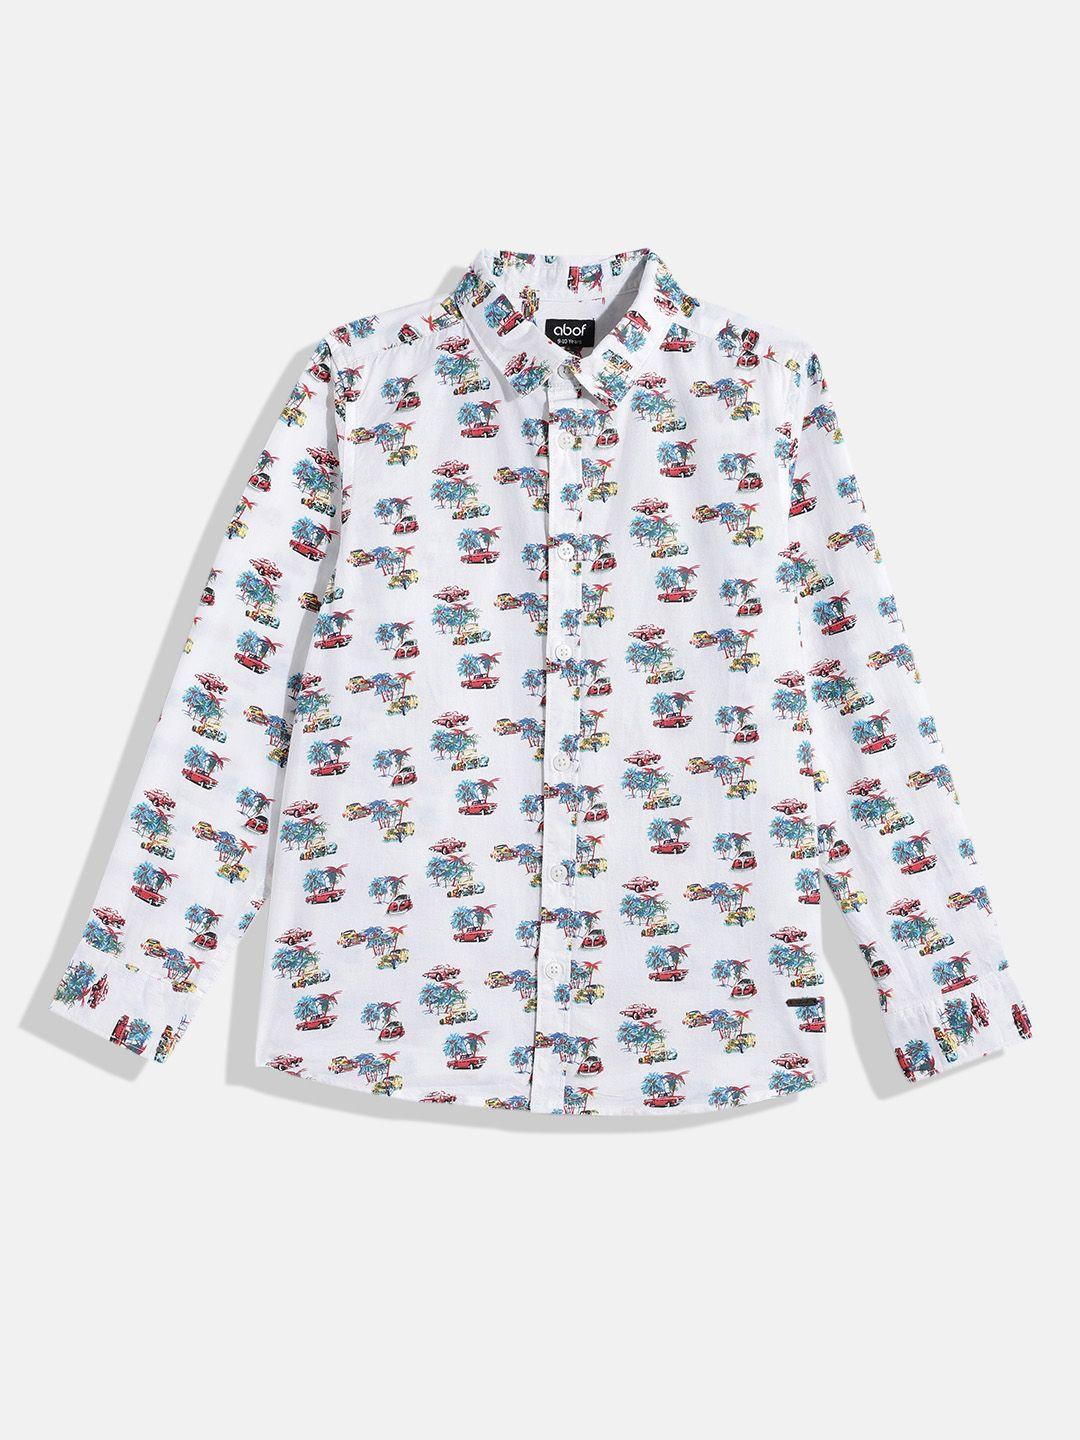 abof boys printed pure cotton casual shirt